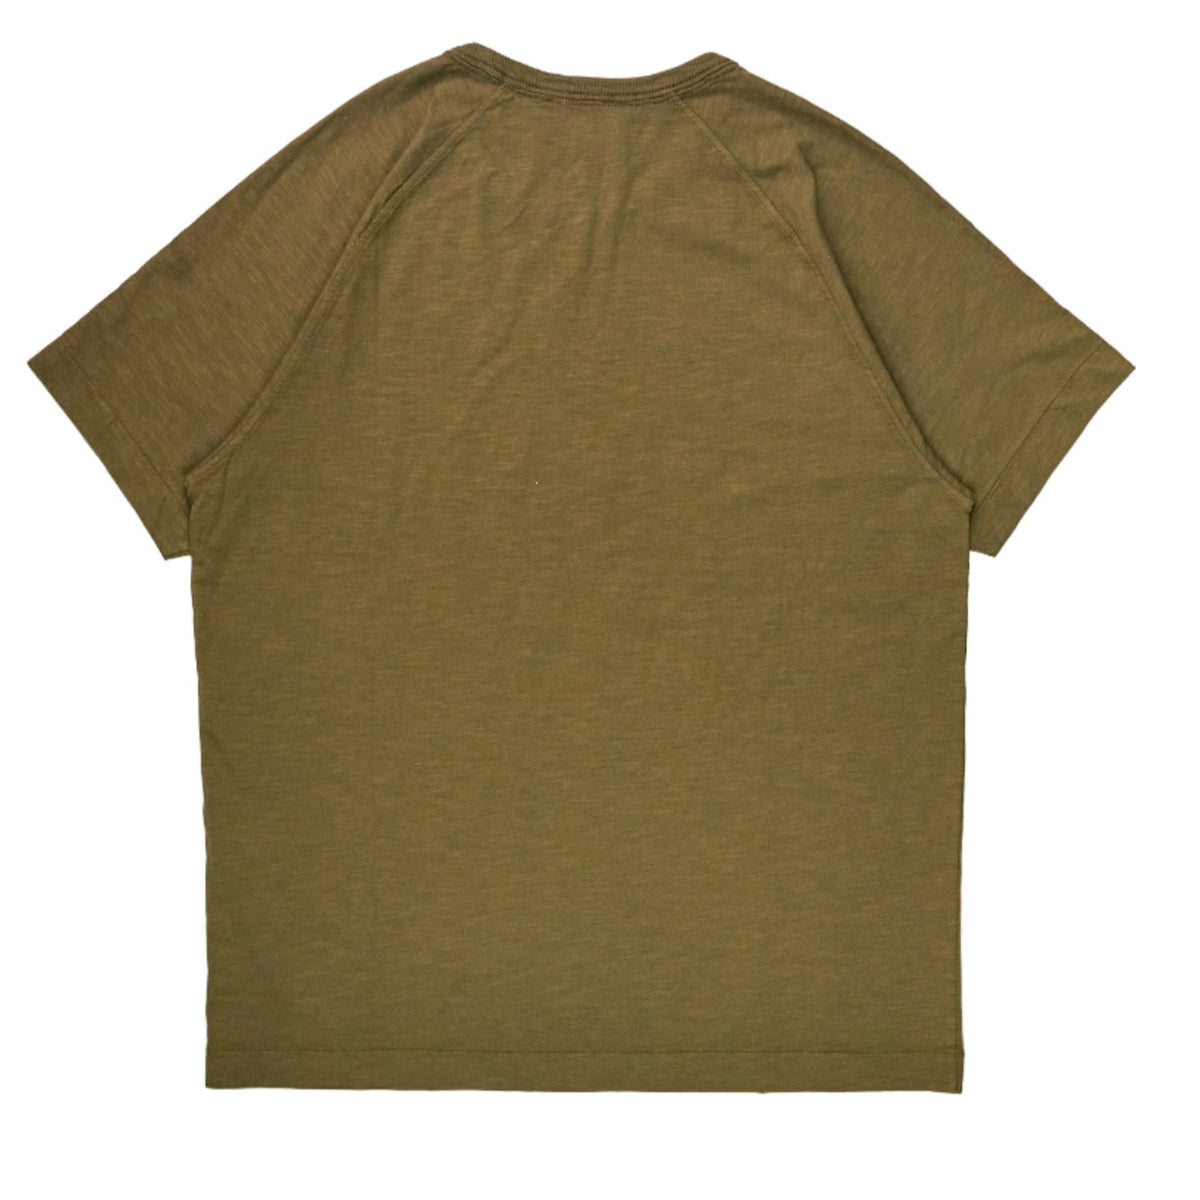 YMC Olive Marl Raglan T-Shirt